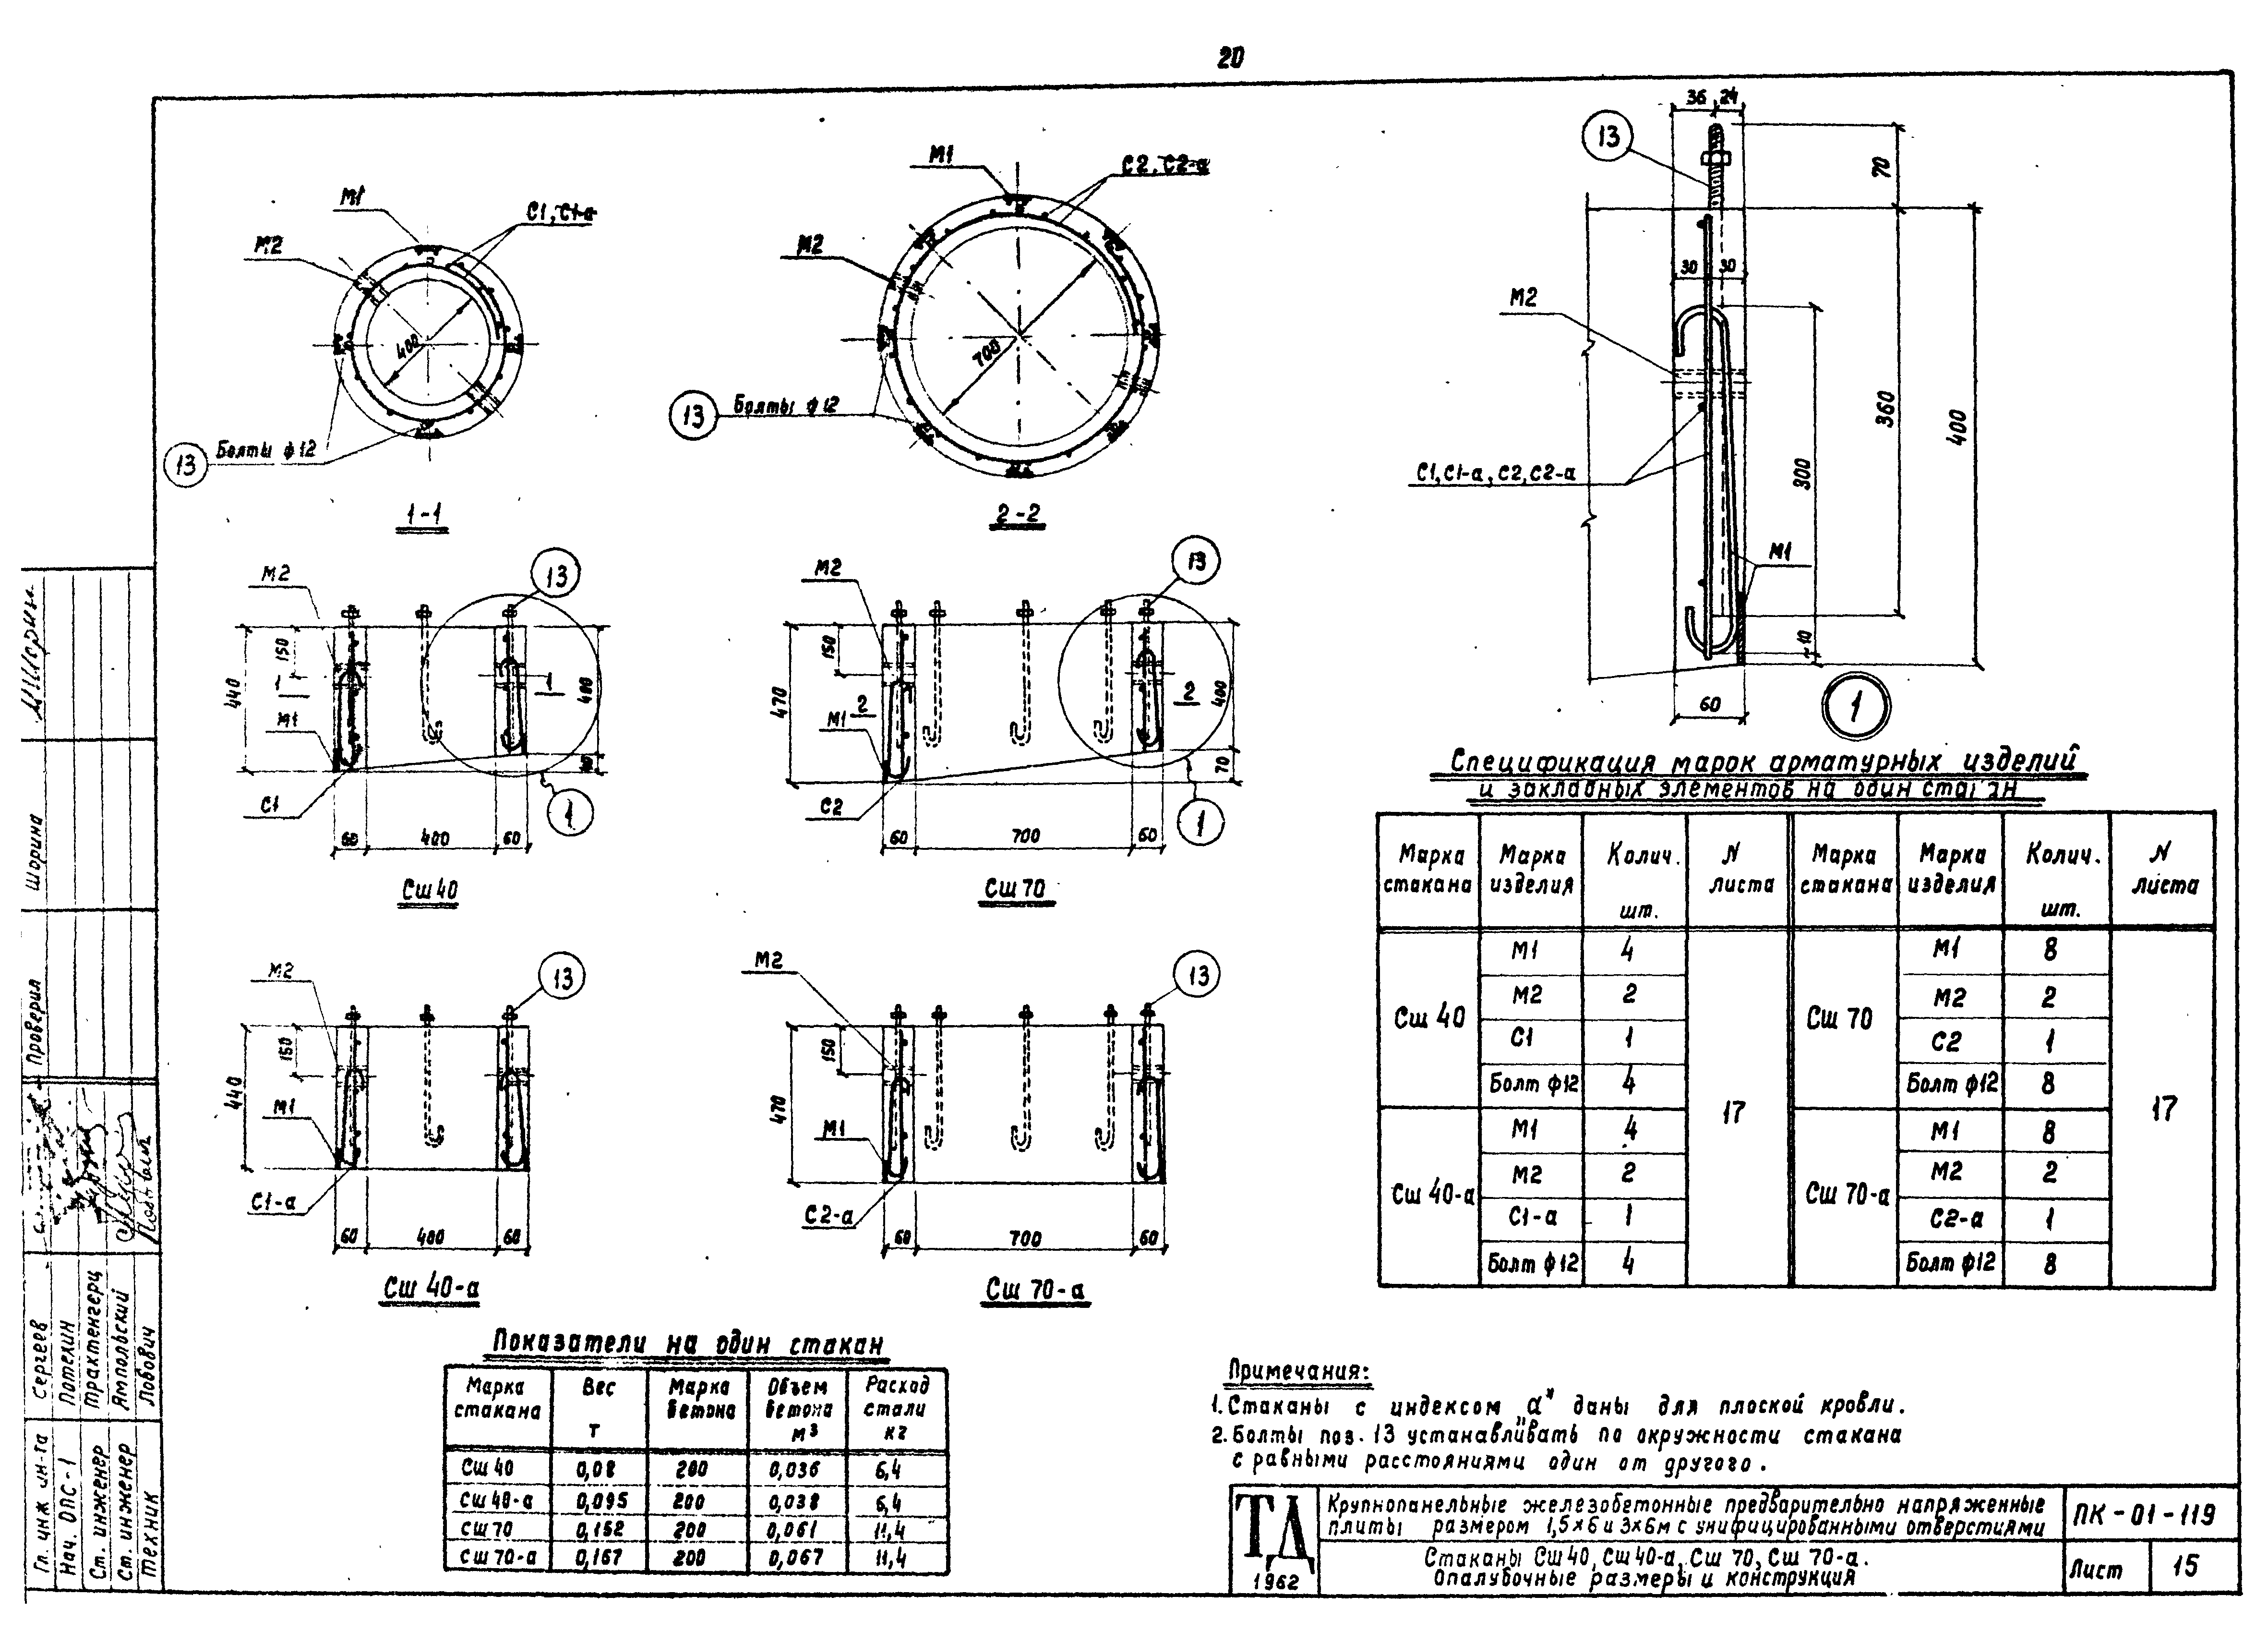 Серия ПК-01-119